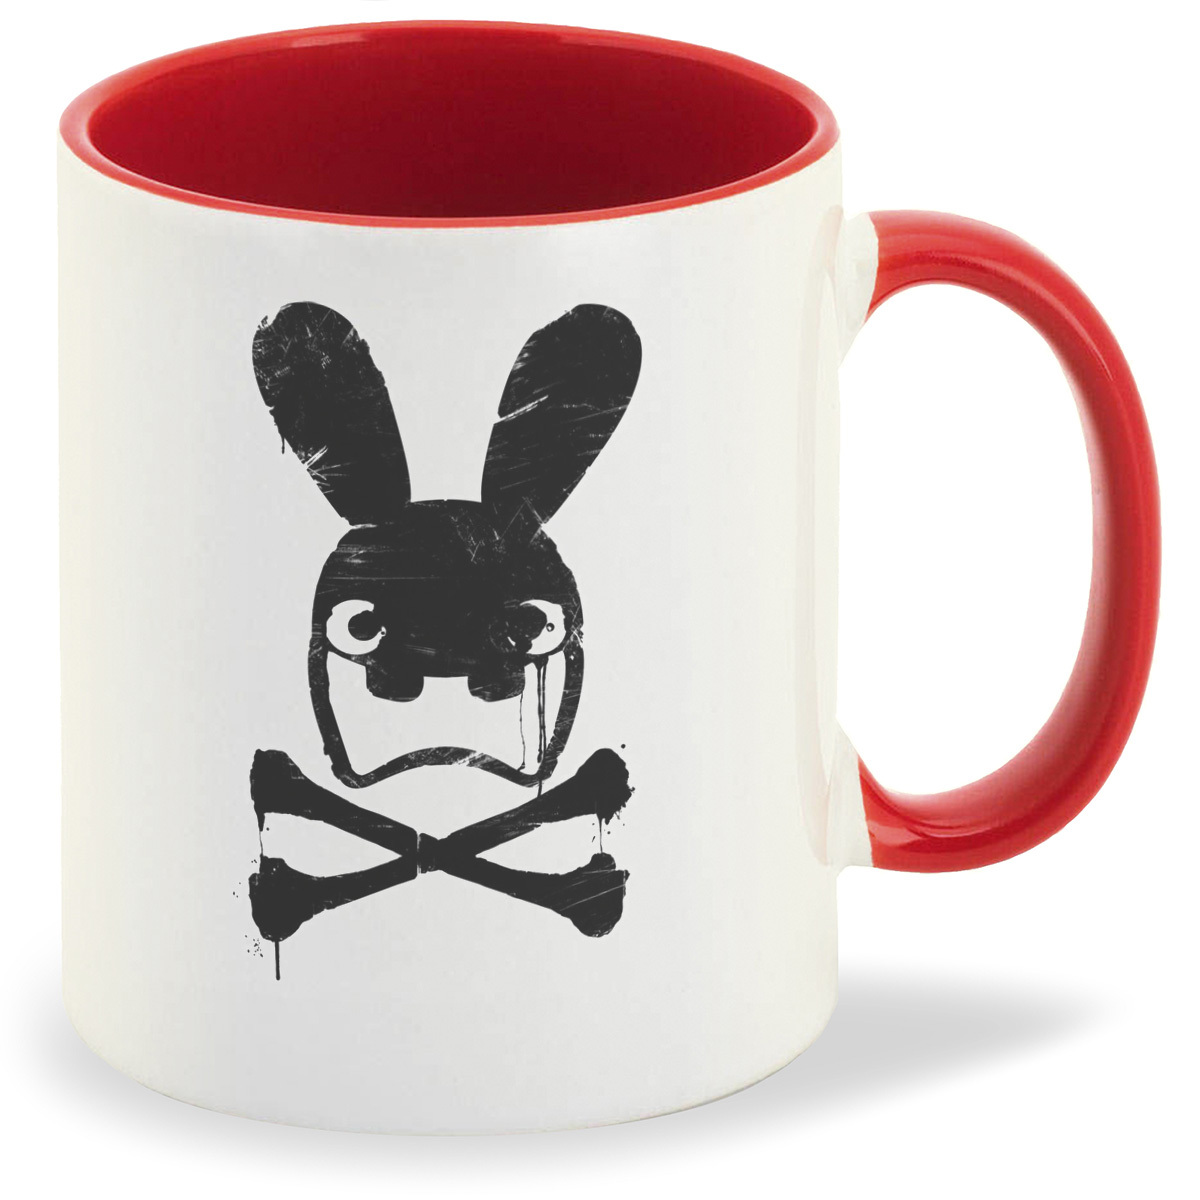 Rabbit cup. Royal Rabbit Cup Кружка. Royal Rabbit Cup посуда. Кружка Royal Rabbit Cup 380. Кролик в чашке.